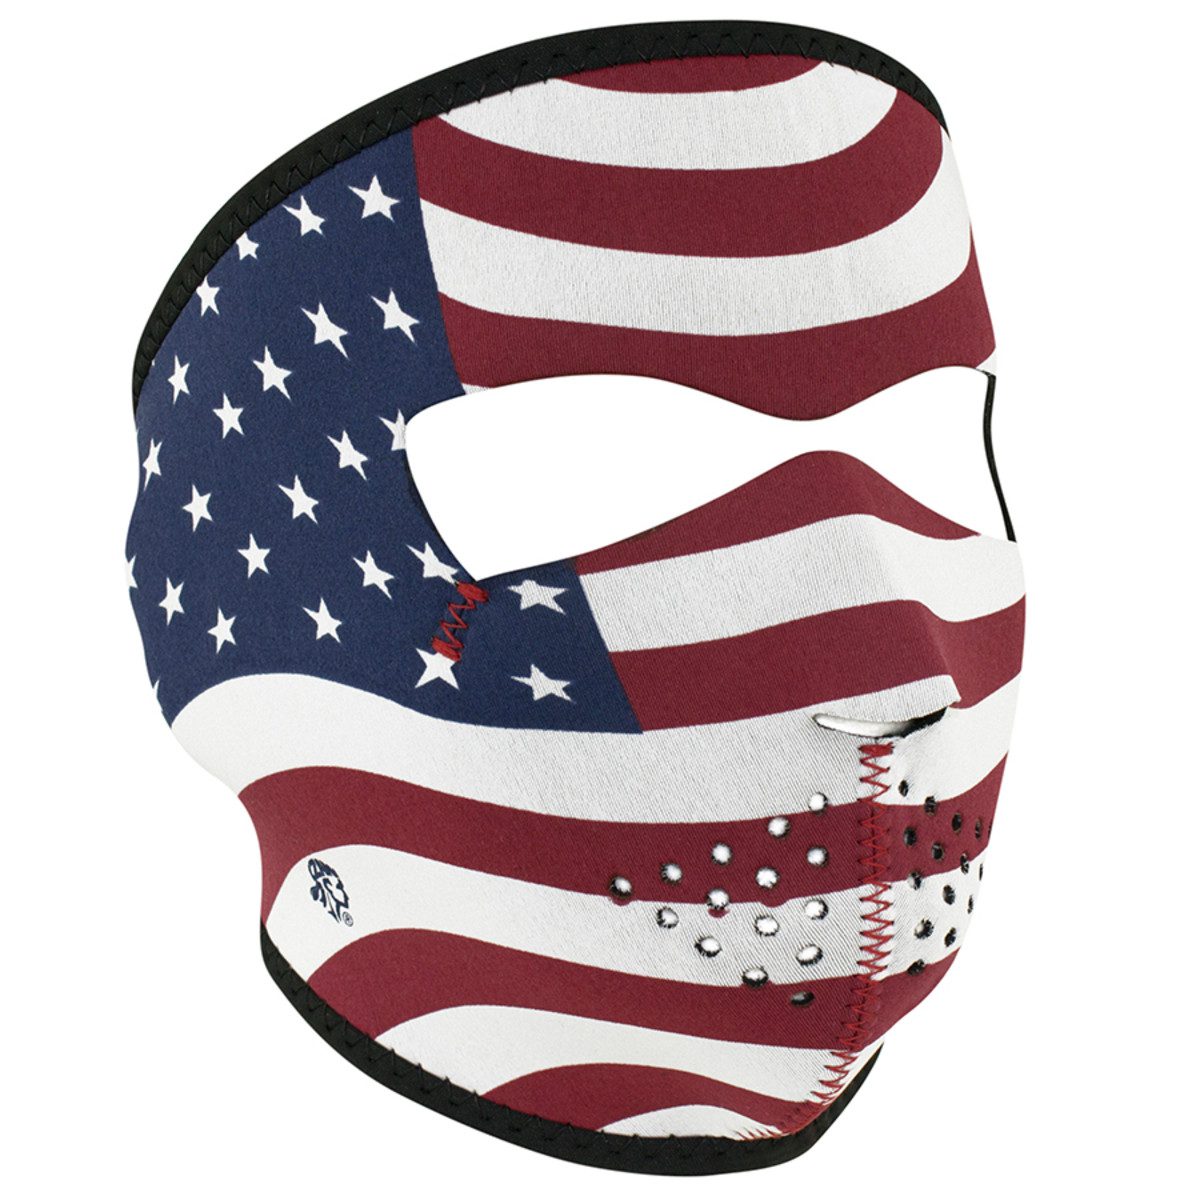 Zan Headgear Neoprene Full Face Mask - Stars & Stripes